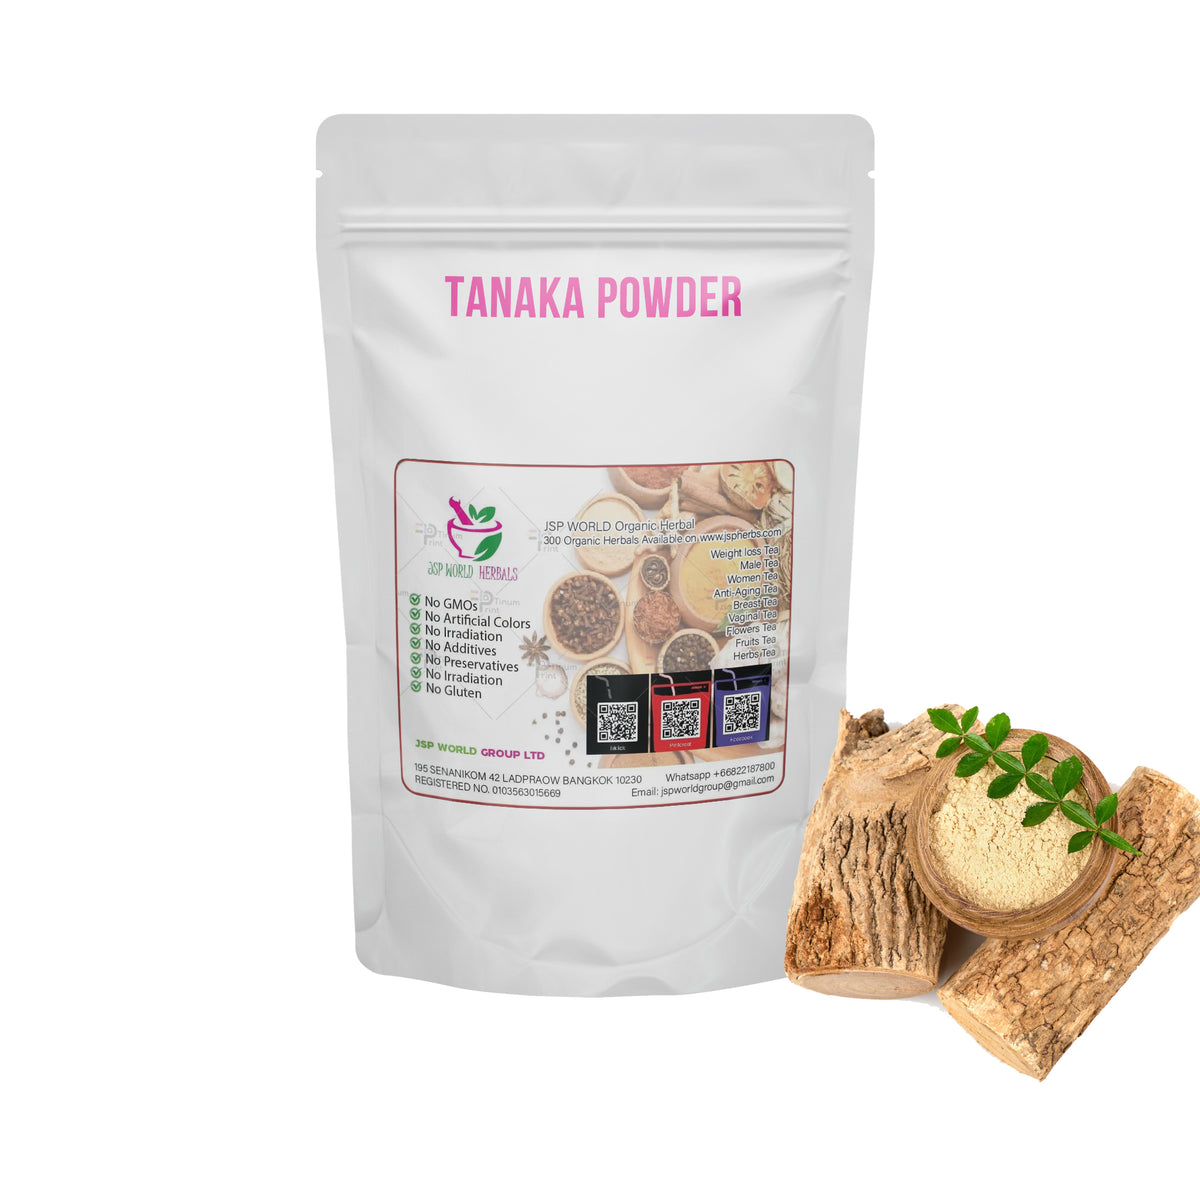 Tanaka Powder 100 Grams 100% Organic Authenic